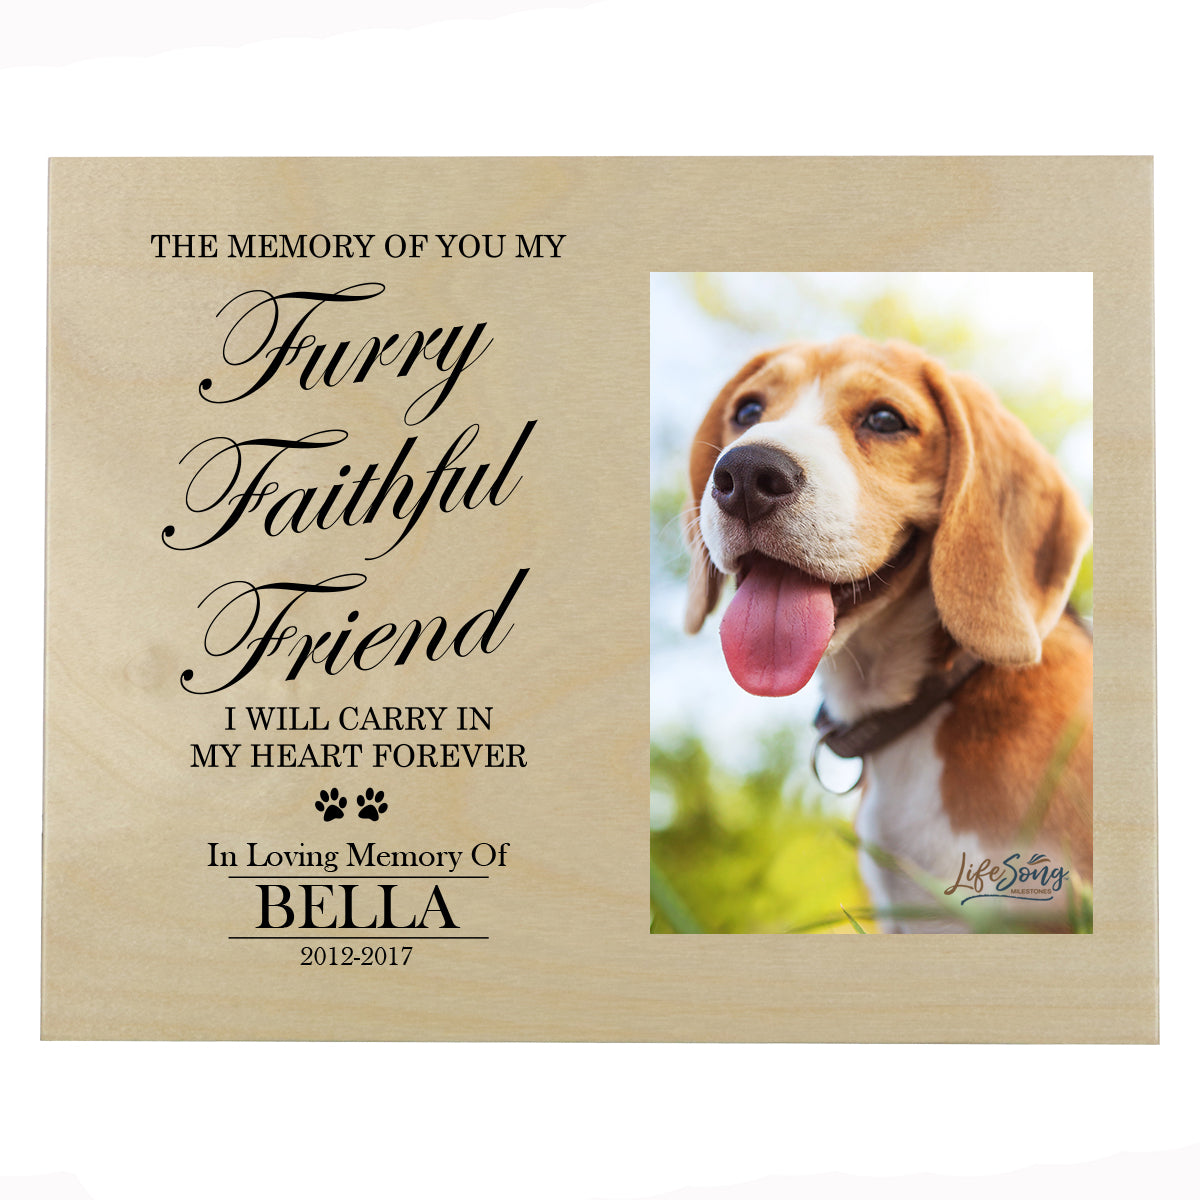 Pet Memorial Photo Wall Plaque Décor - The Memory of You